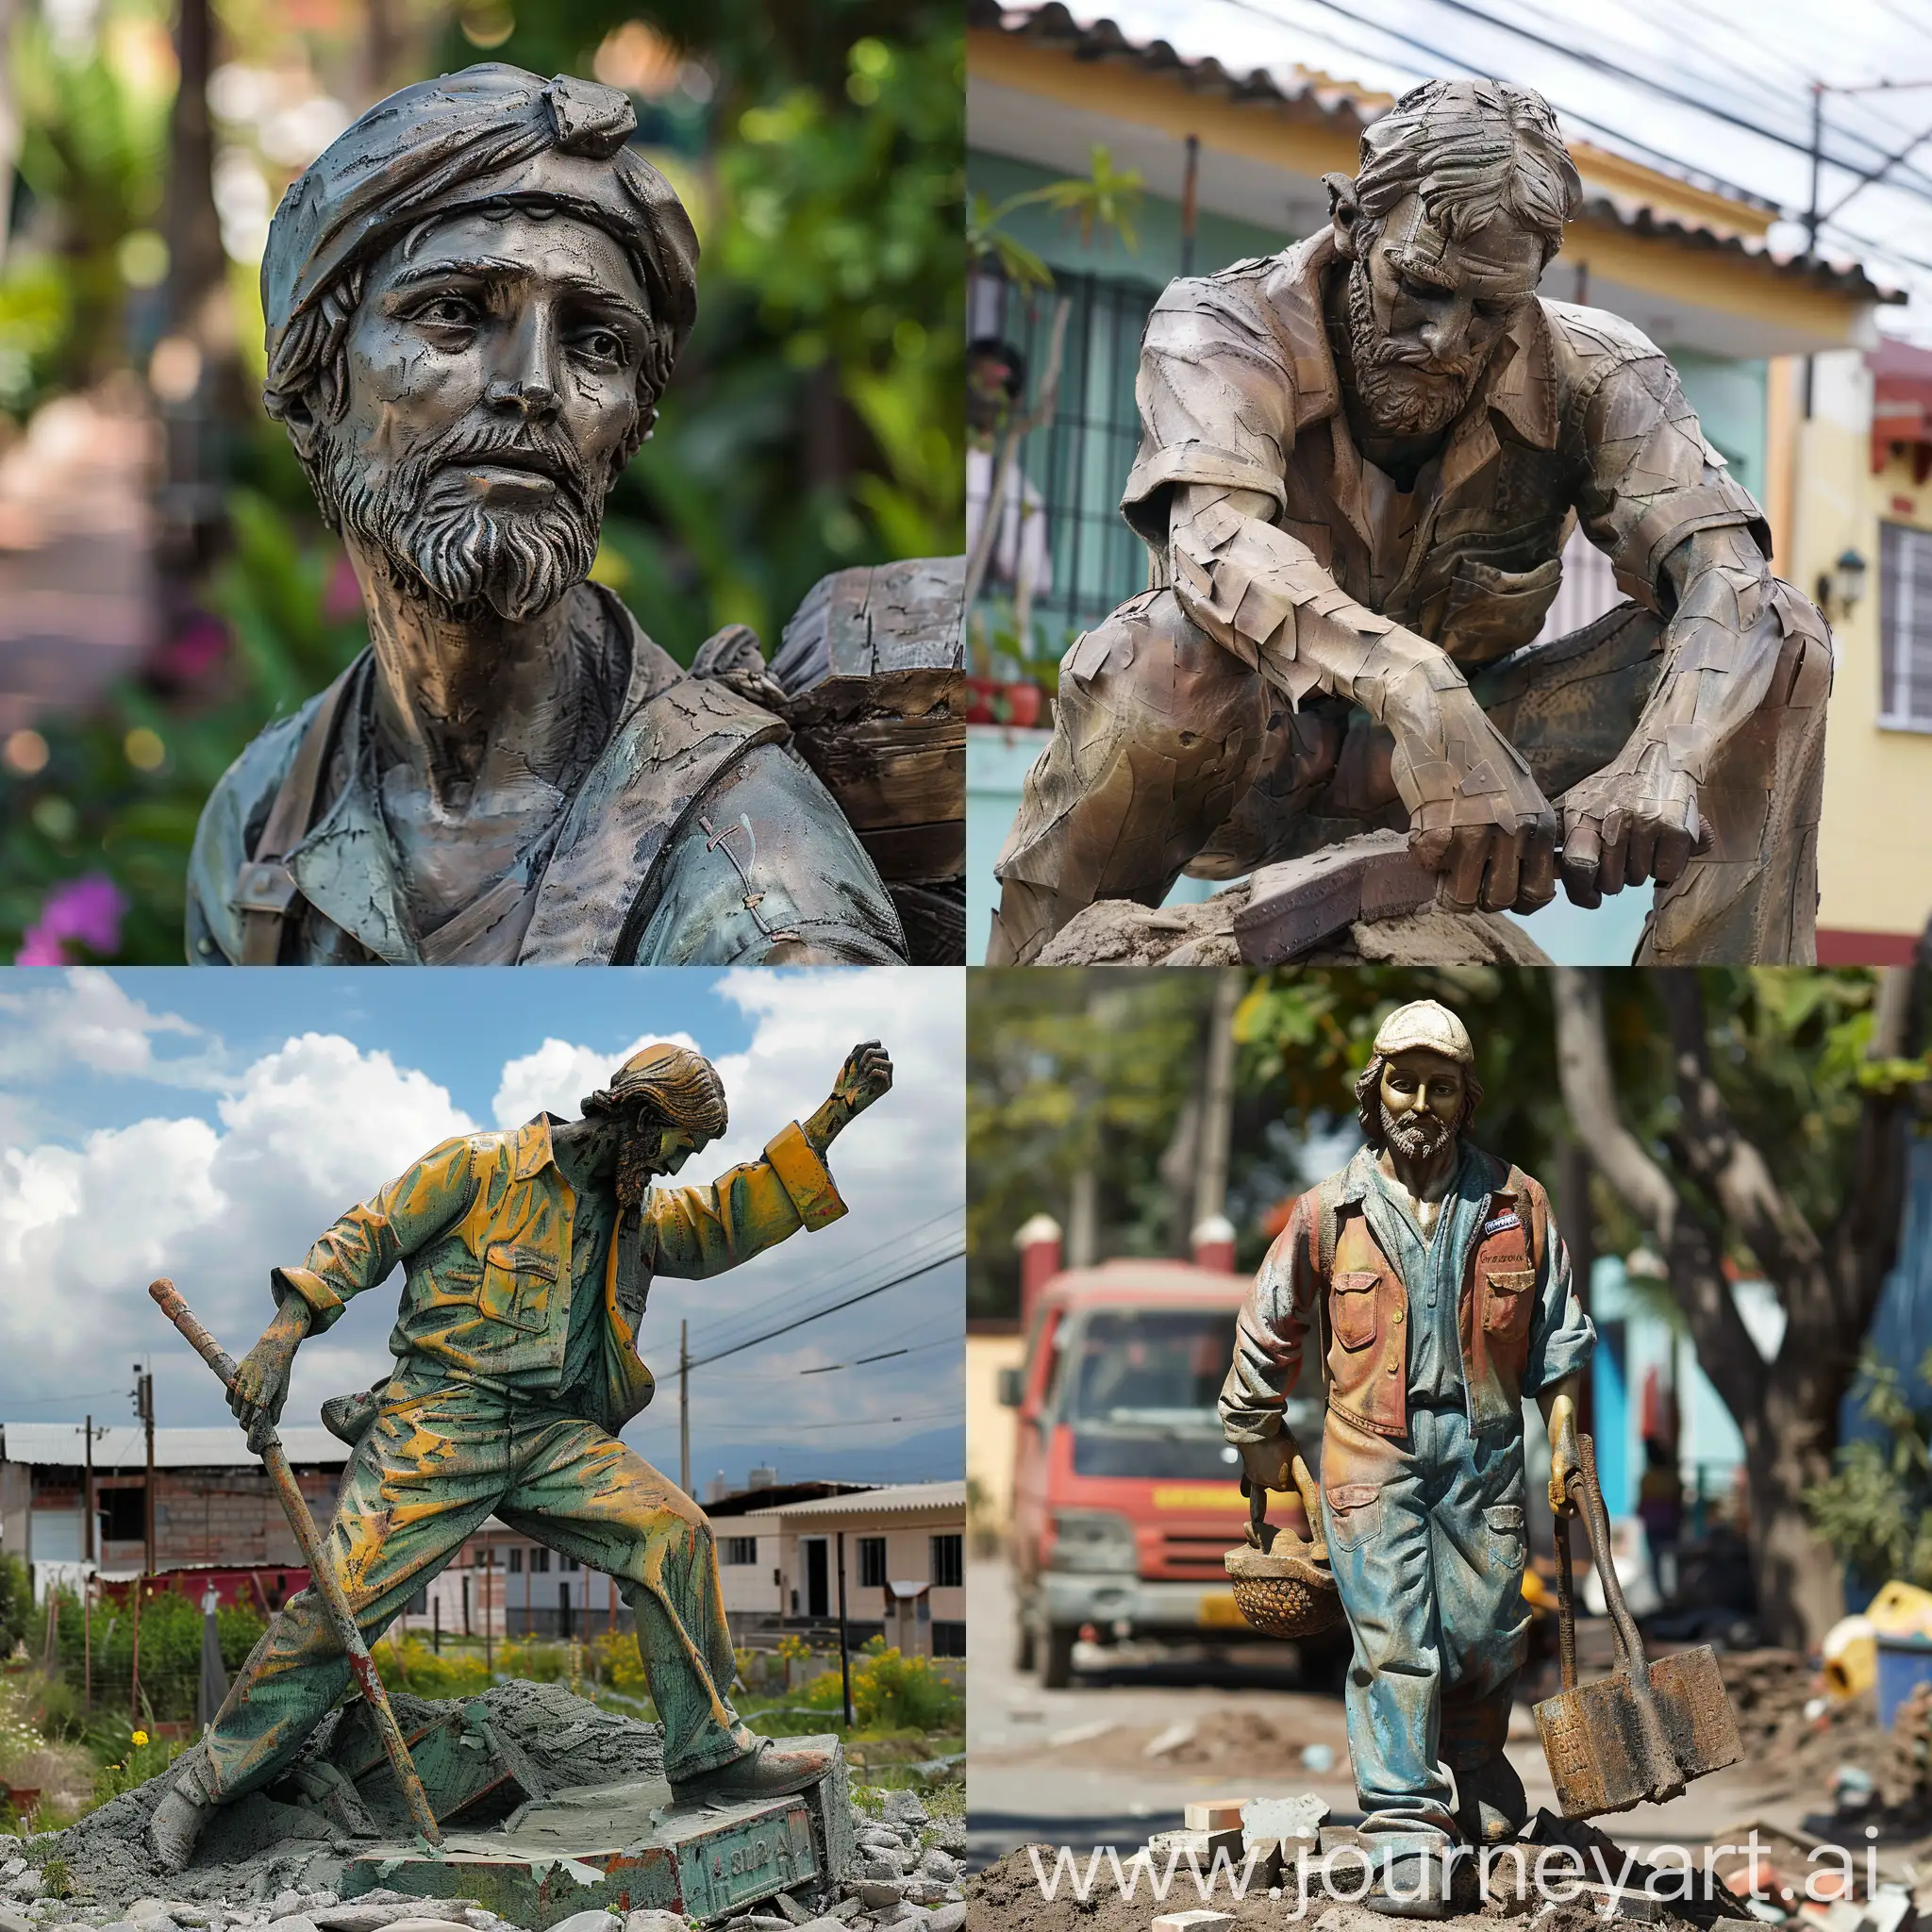 Contemporary-Urban-Sculpture-Jesus-the-Worker-in-Santa-Margarita